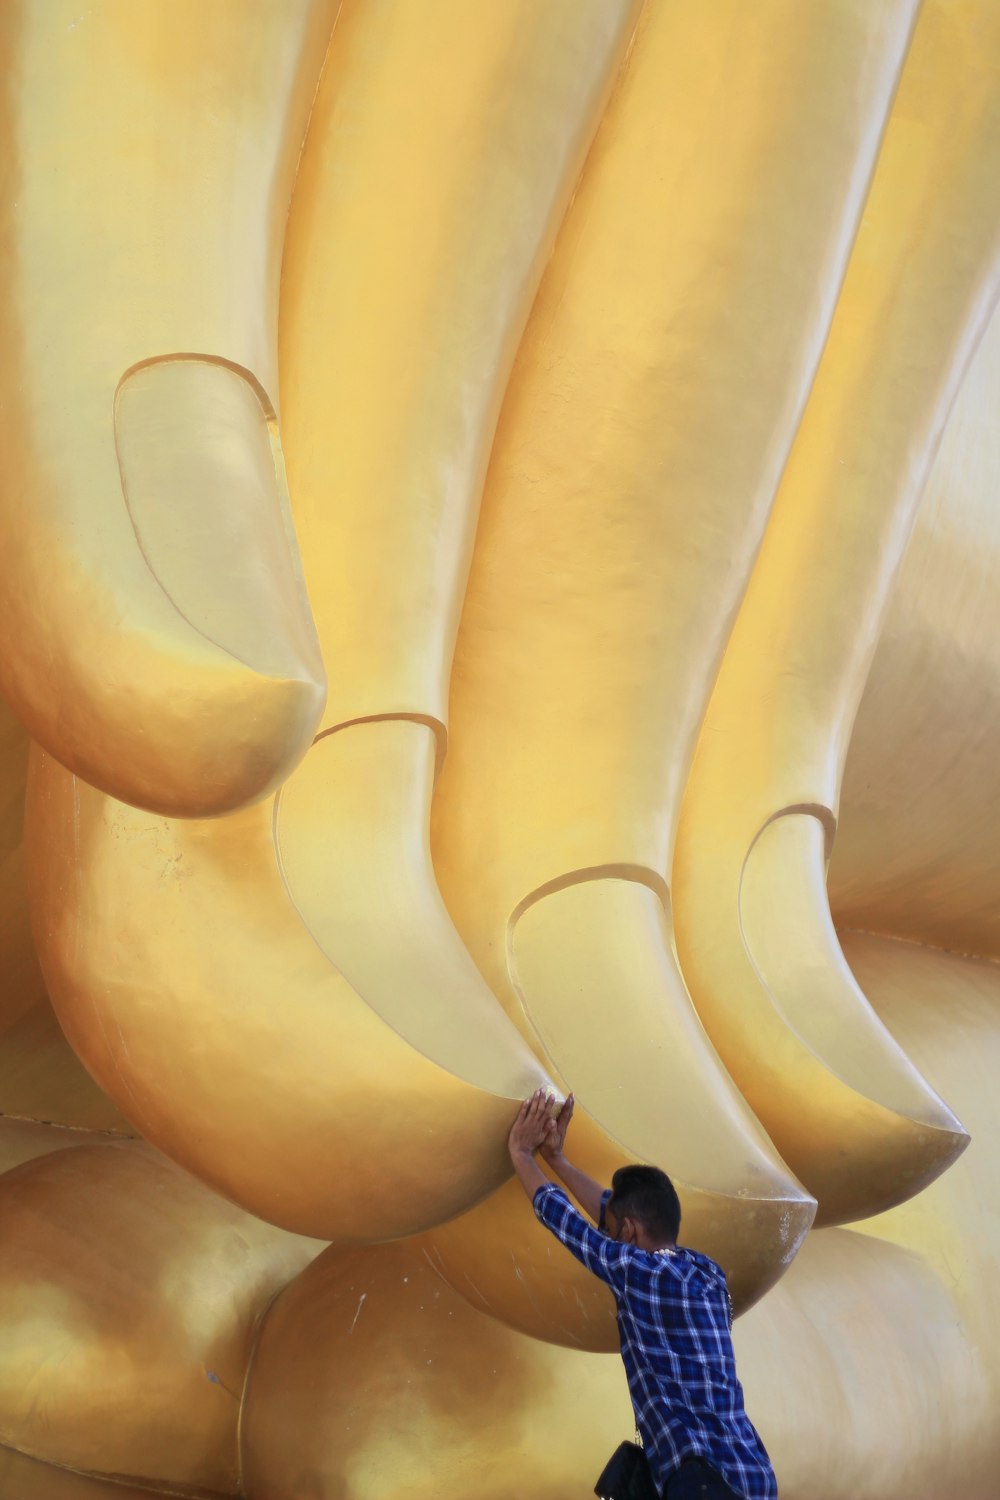 a man standing next to a giant banana sculpture